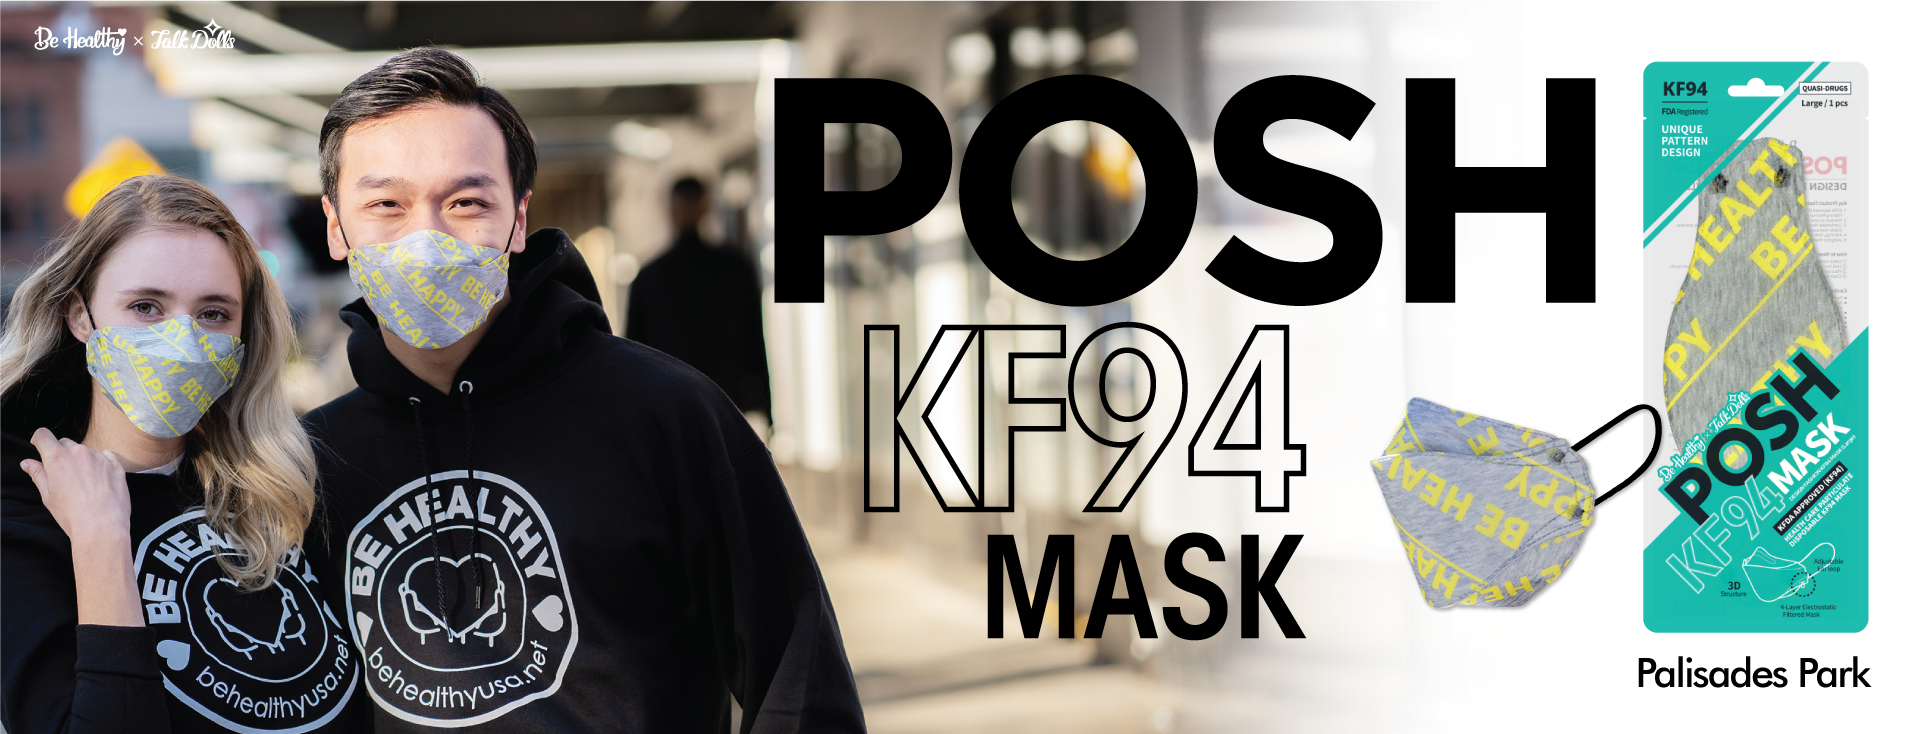 POSH KF94 Mask Palisades Park